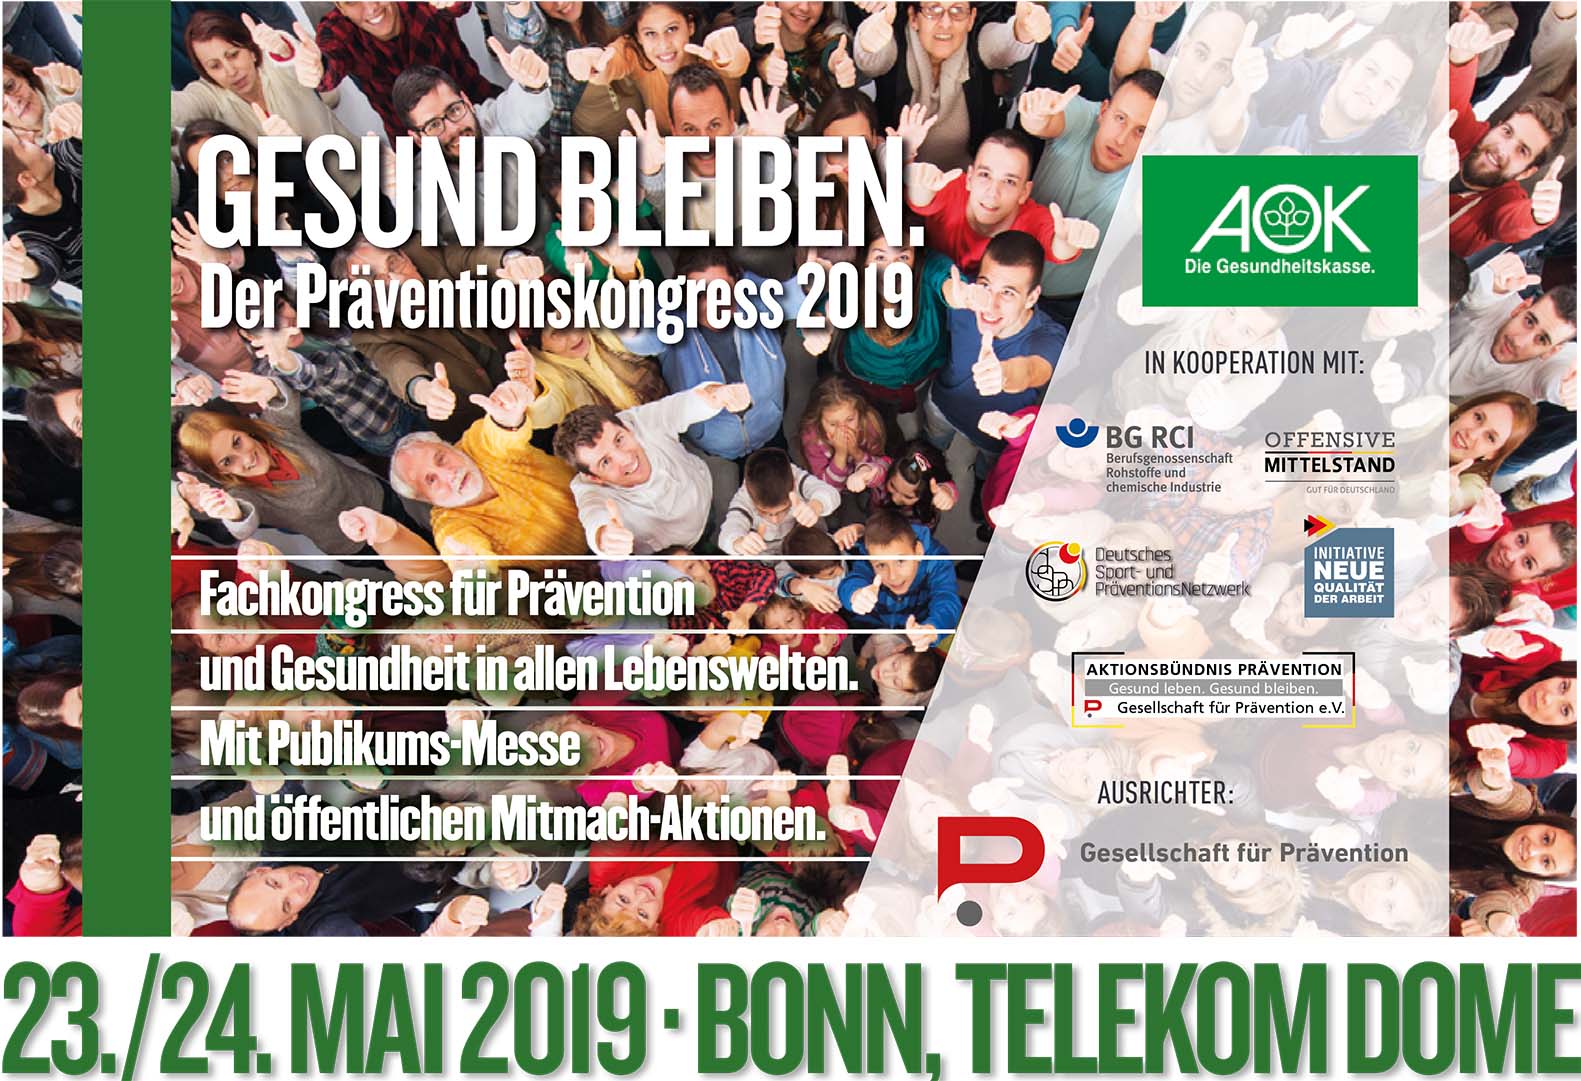 Präventionskongress im Telekom Dome am 23./24. Mai 2019 in Bonn